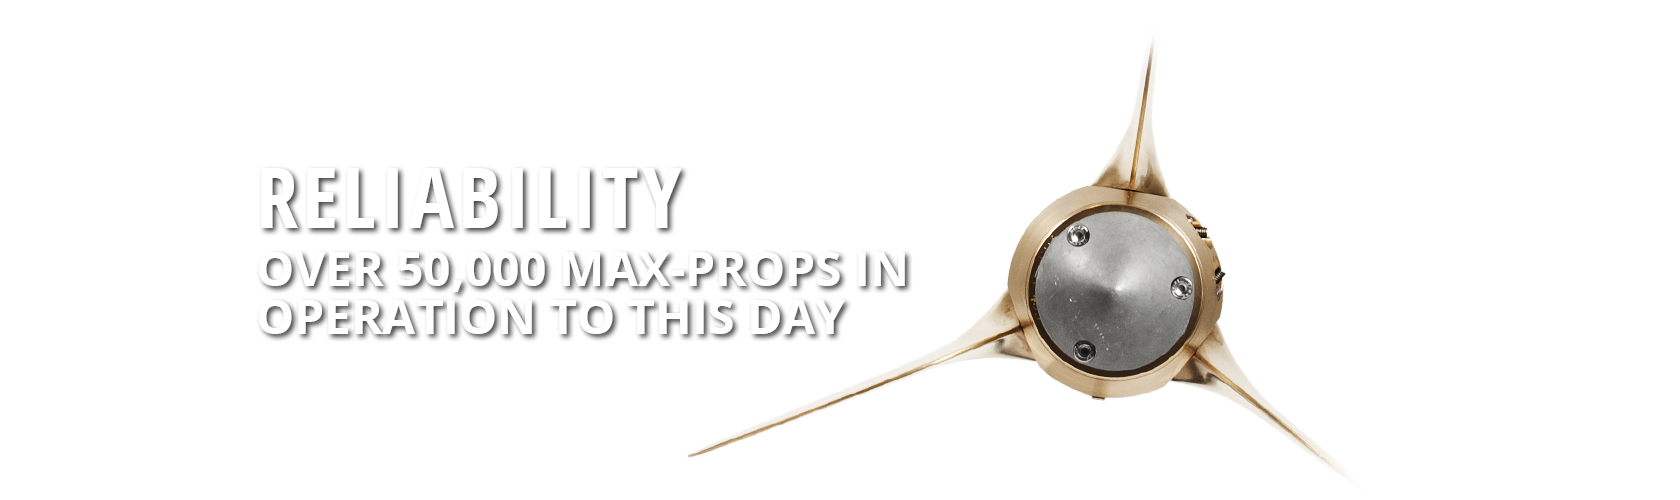 Max-Prop adjustable pitch